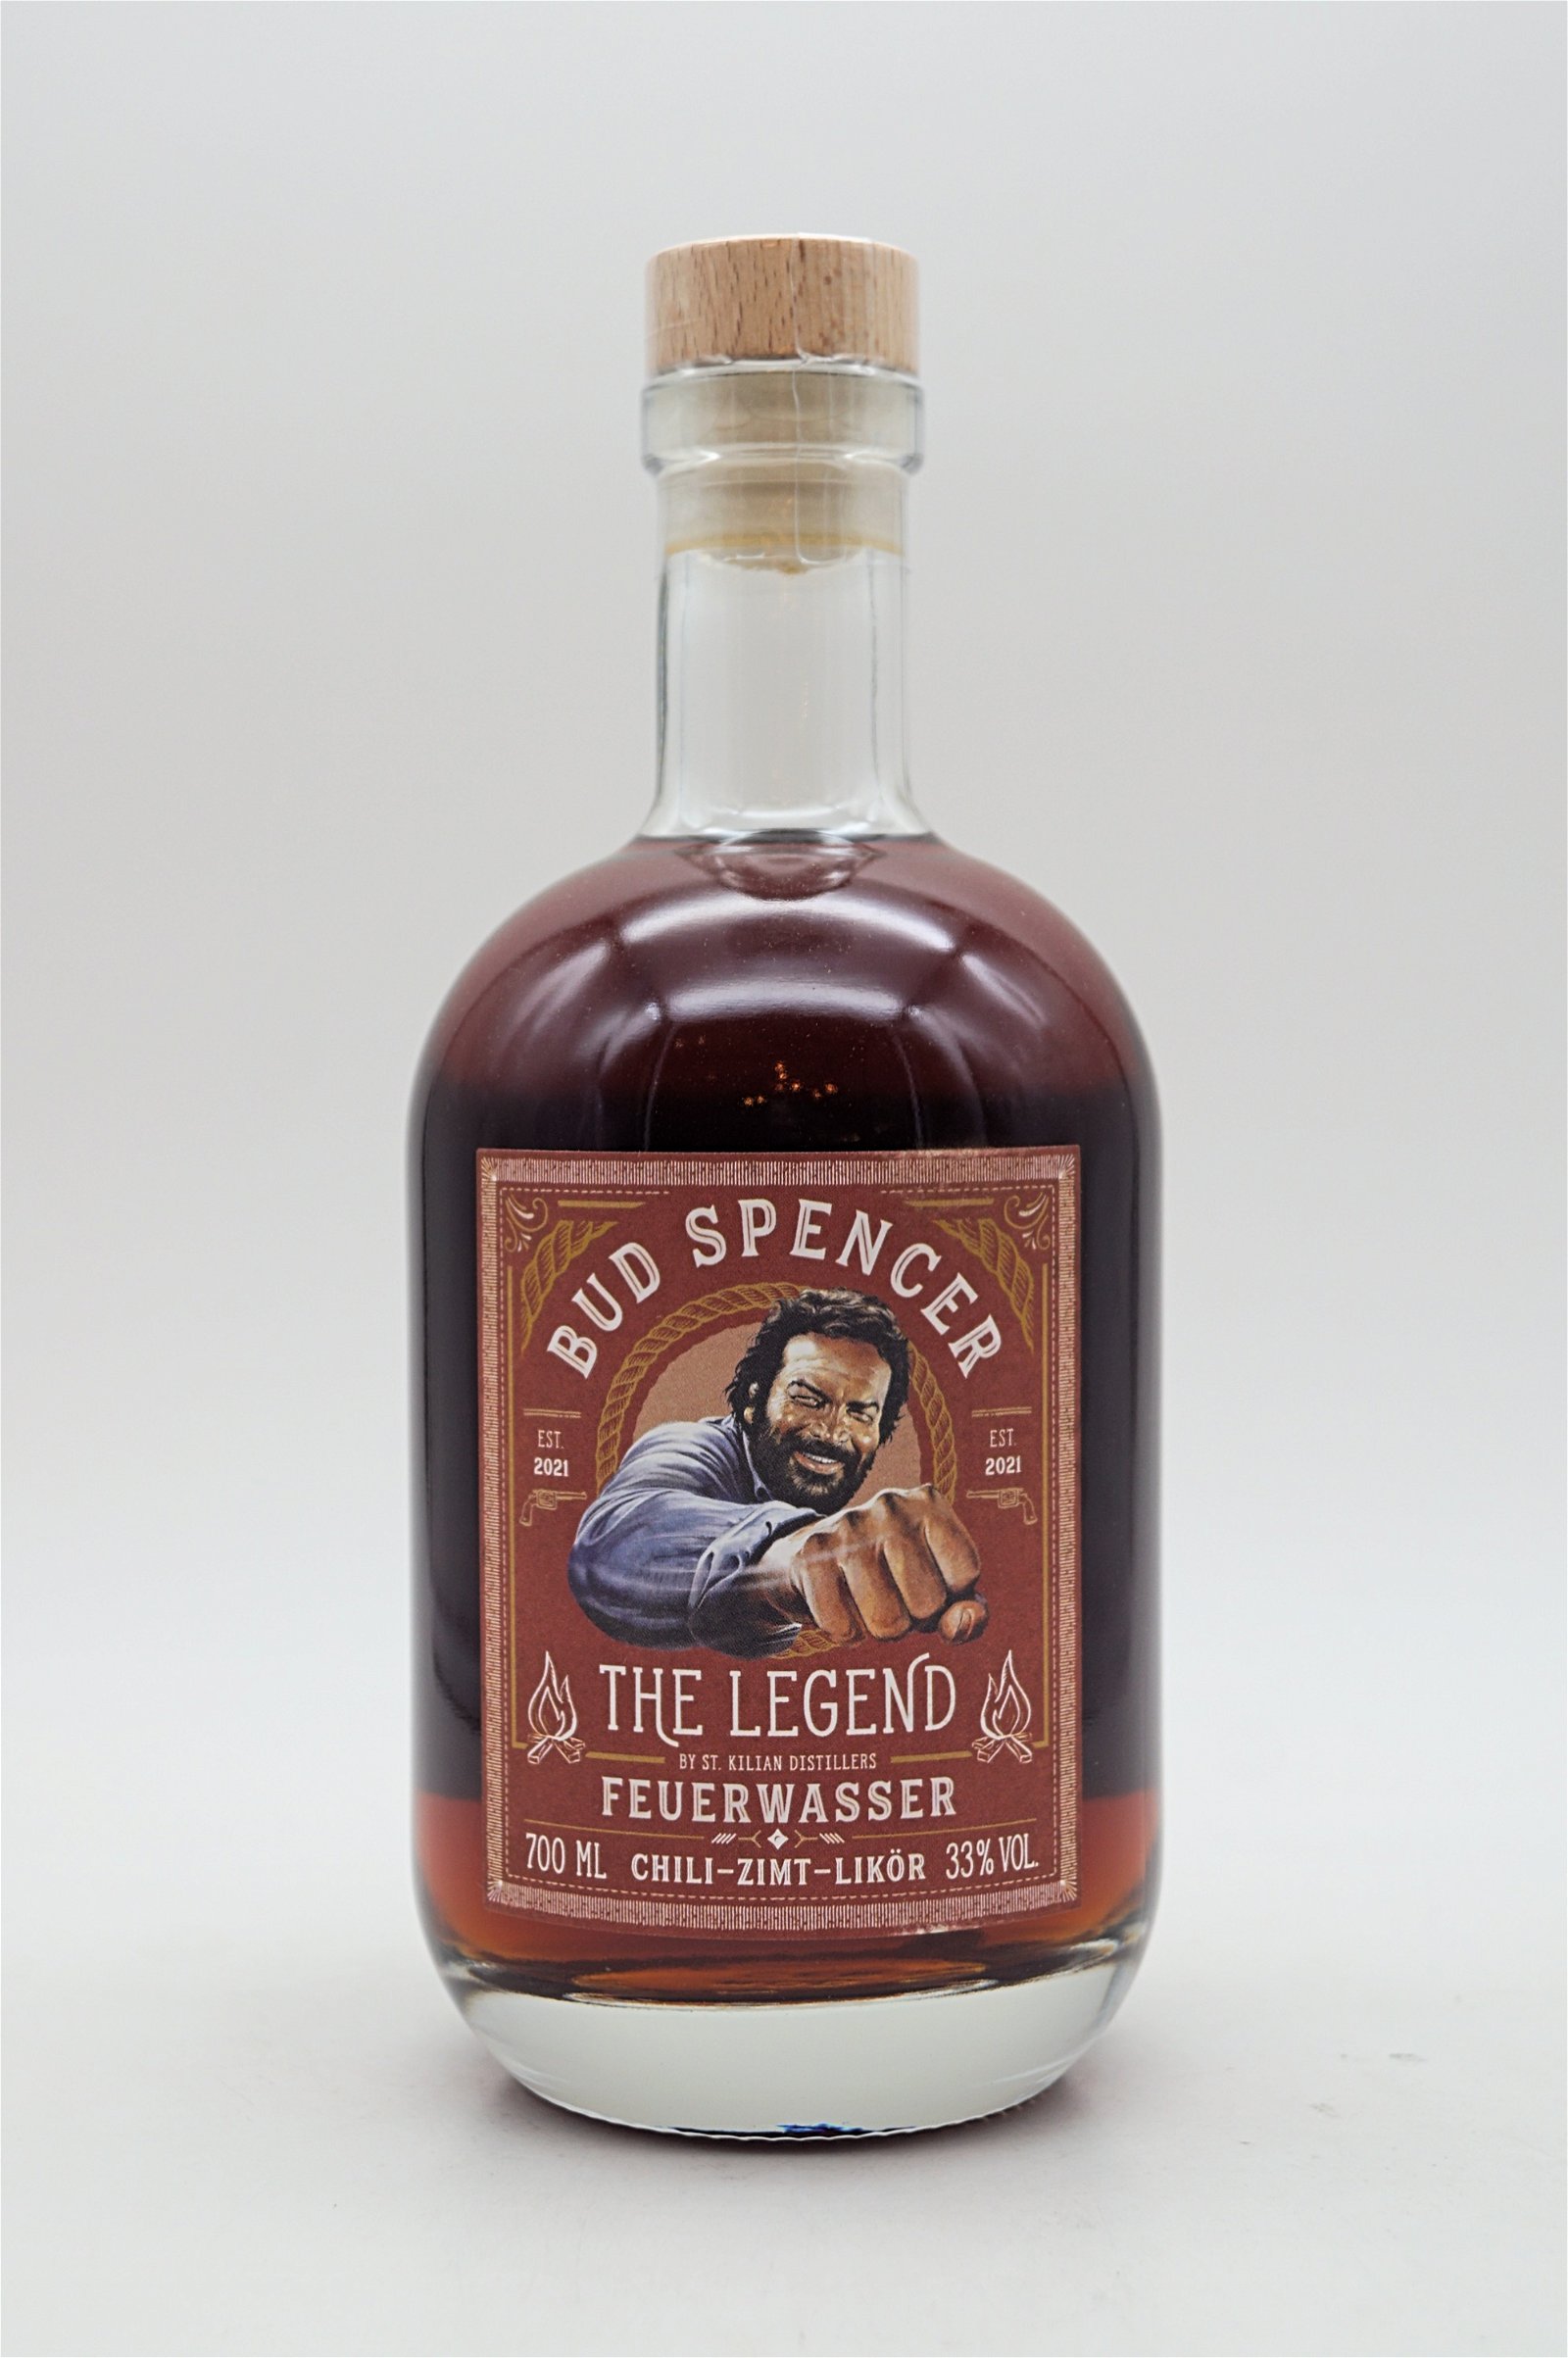 St. Kilian Distillers Bud Spencer The Legend Feuerwasser Chili-Zimt Whiskylikör